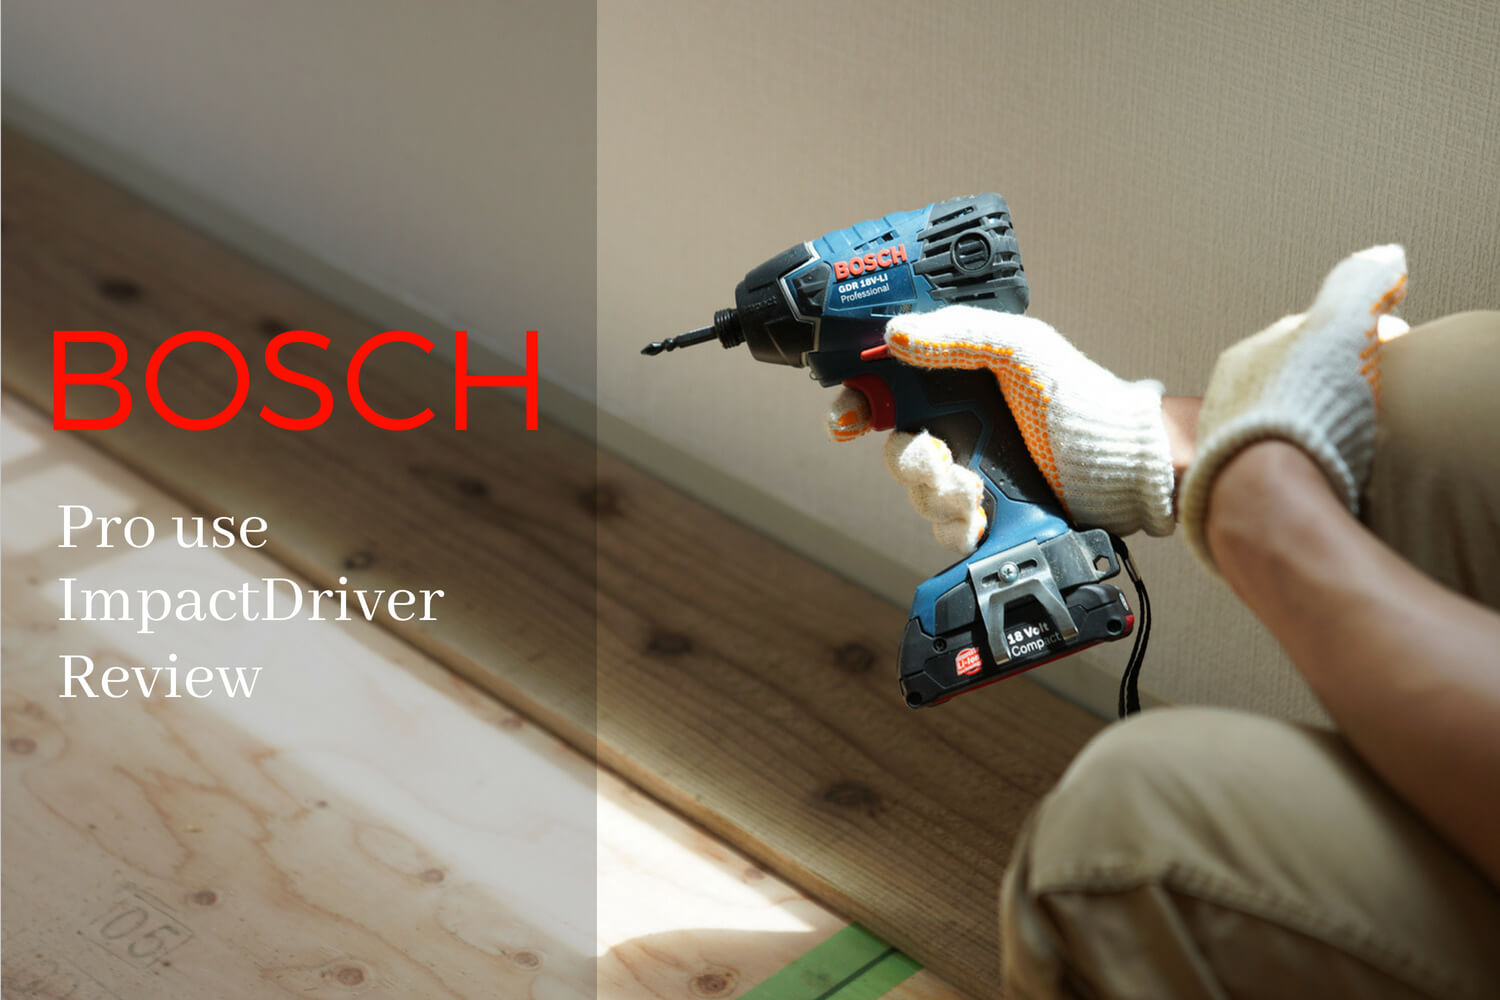 BOSCH(ボッシュ)のプロ用インパクトドライバーをレビュー。安価で